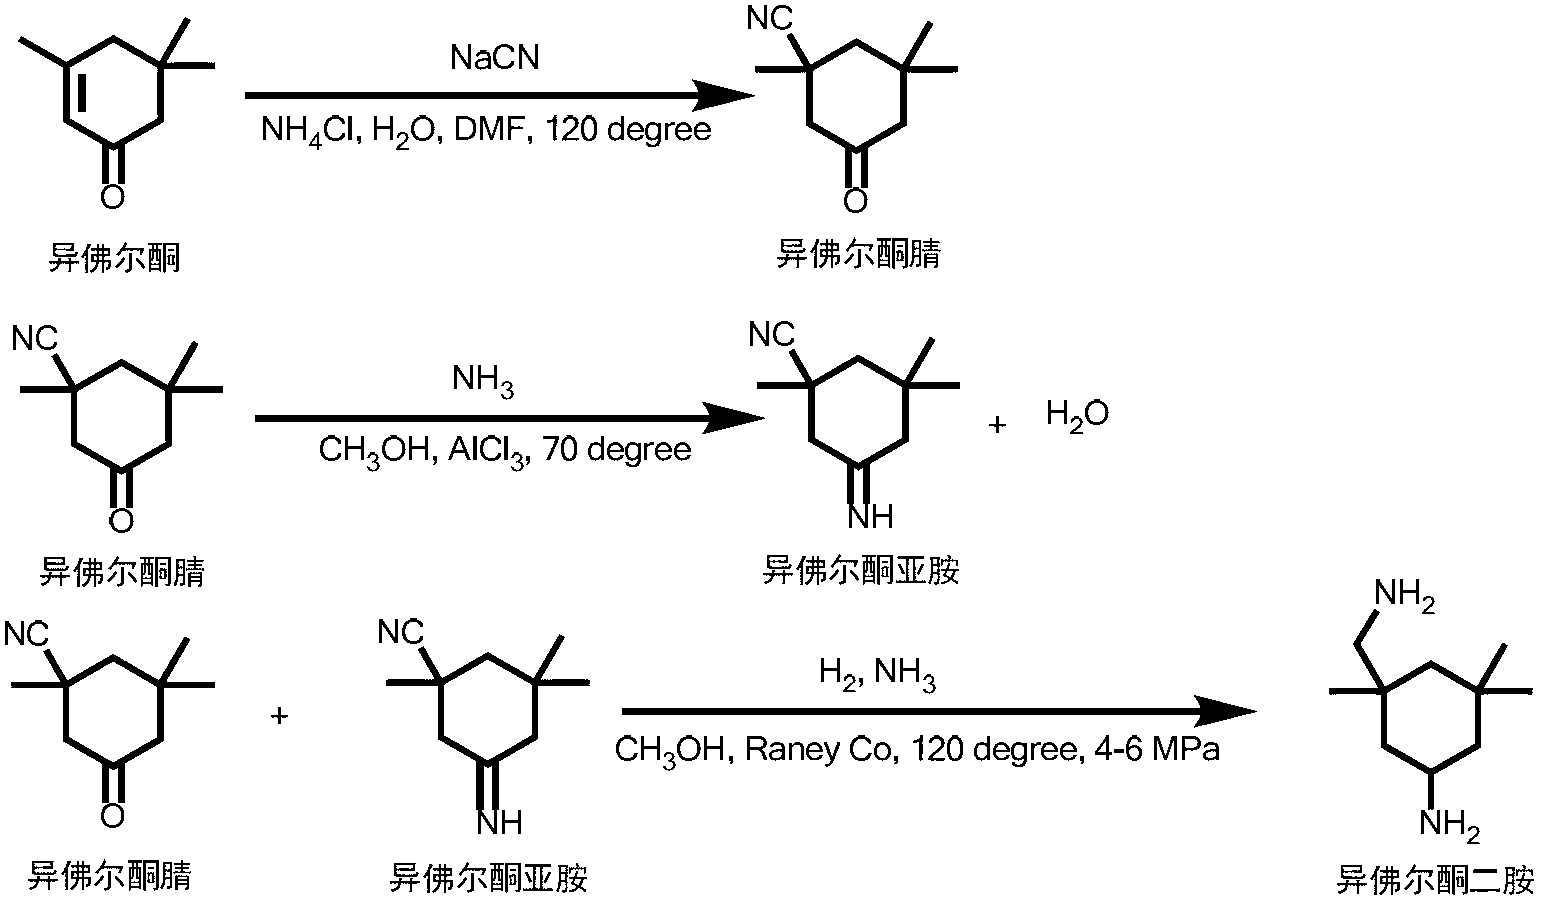 Method for preparing isophorone diamine